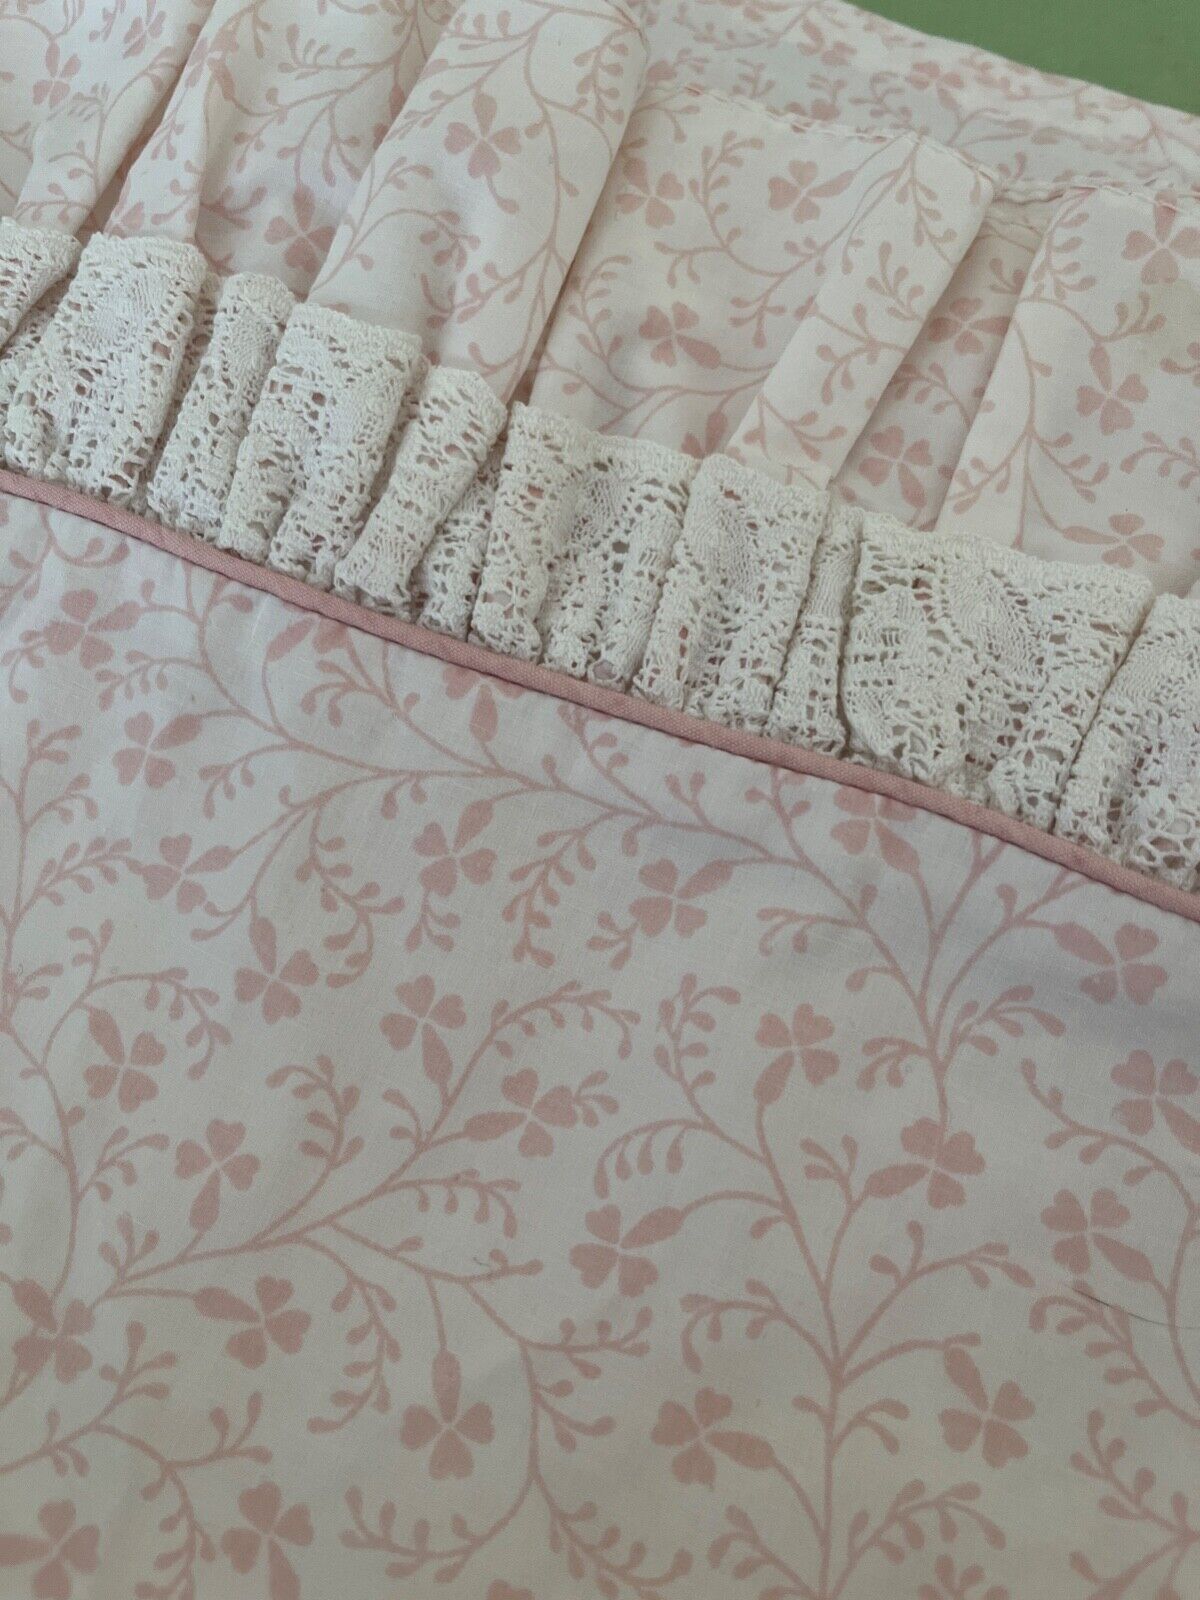 Vtg LAURA ASHLEY FULL Size Flat Sheet Pink Flowers & Lace Ruffle